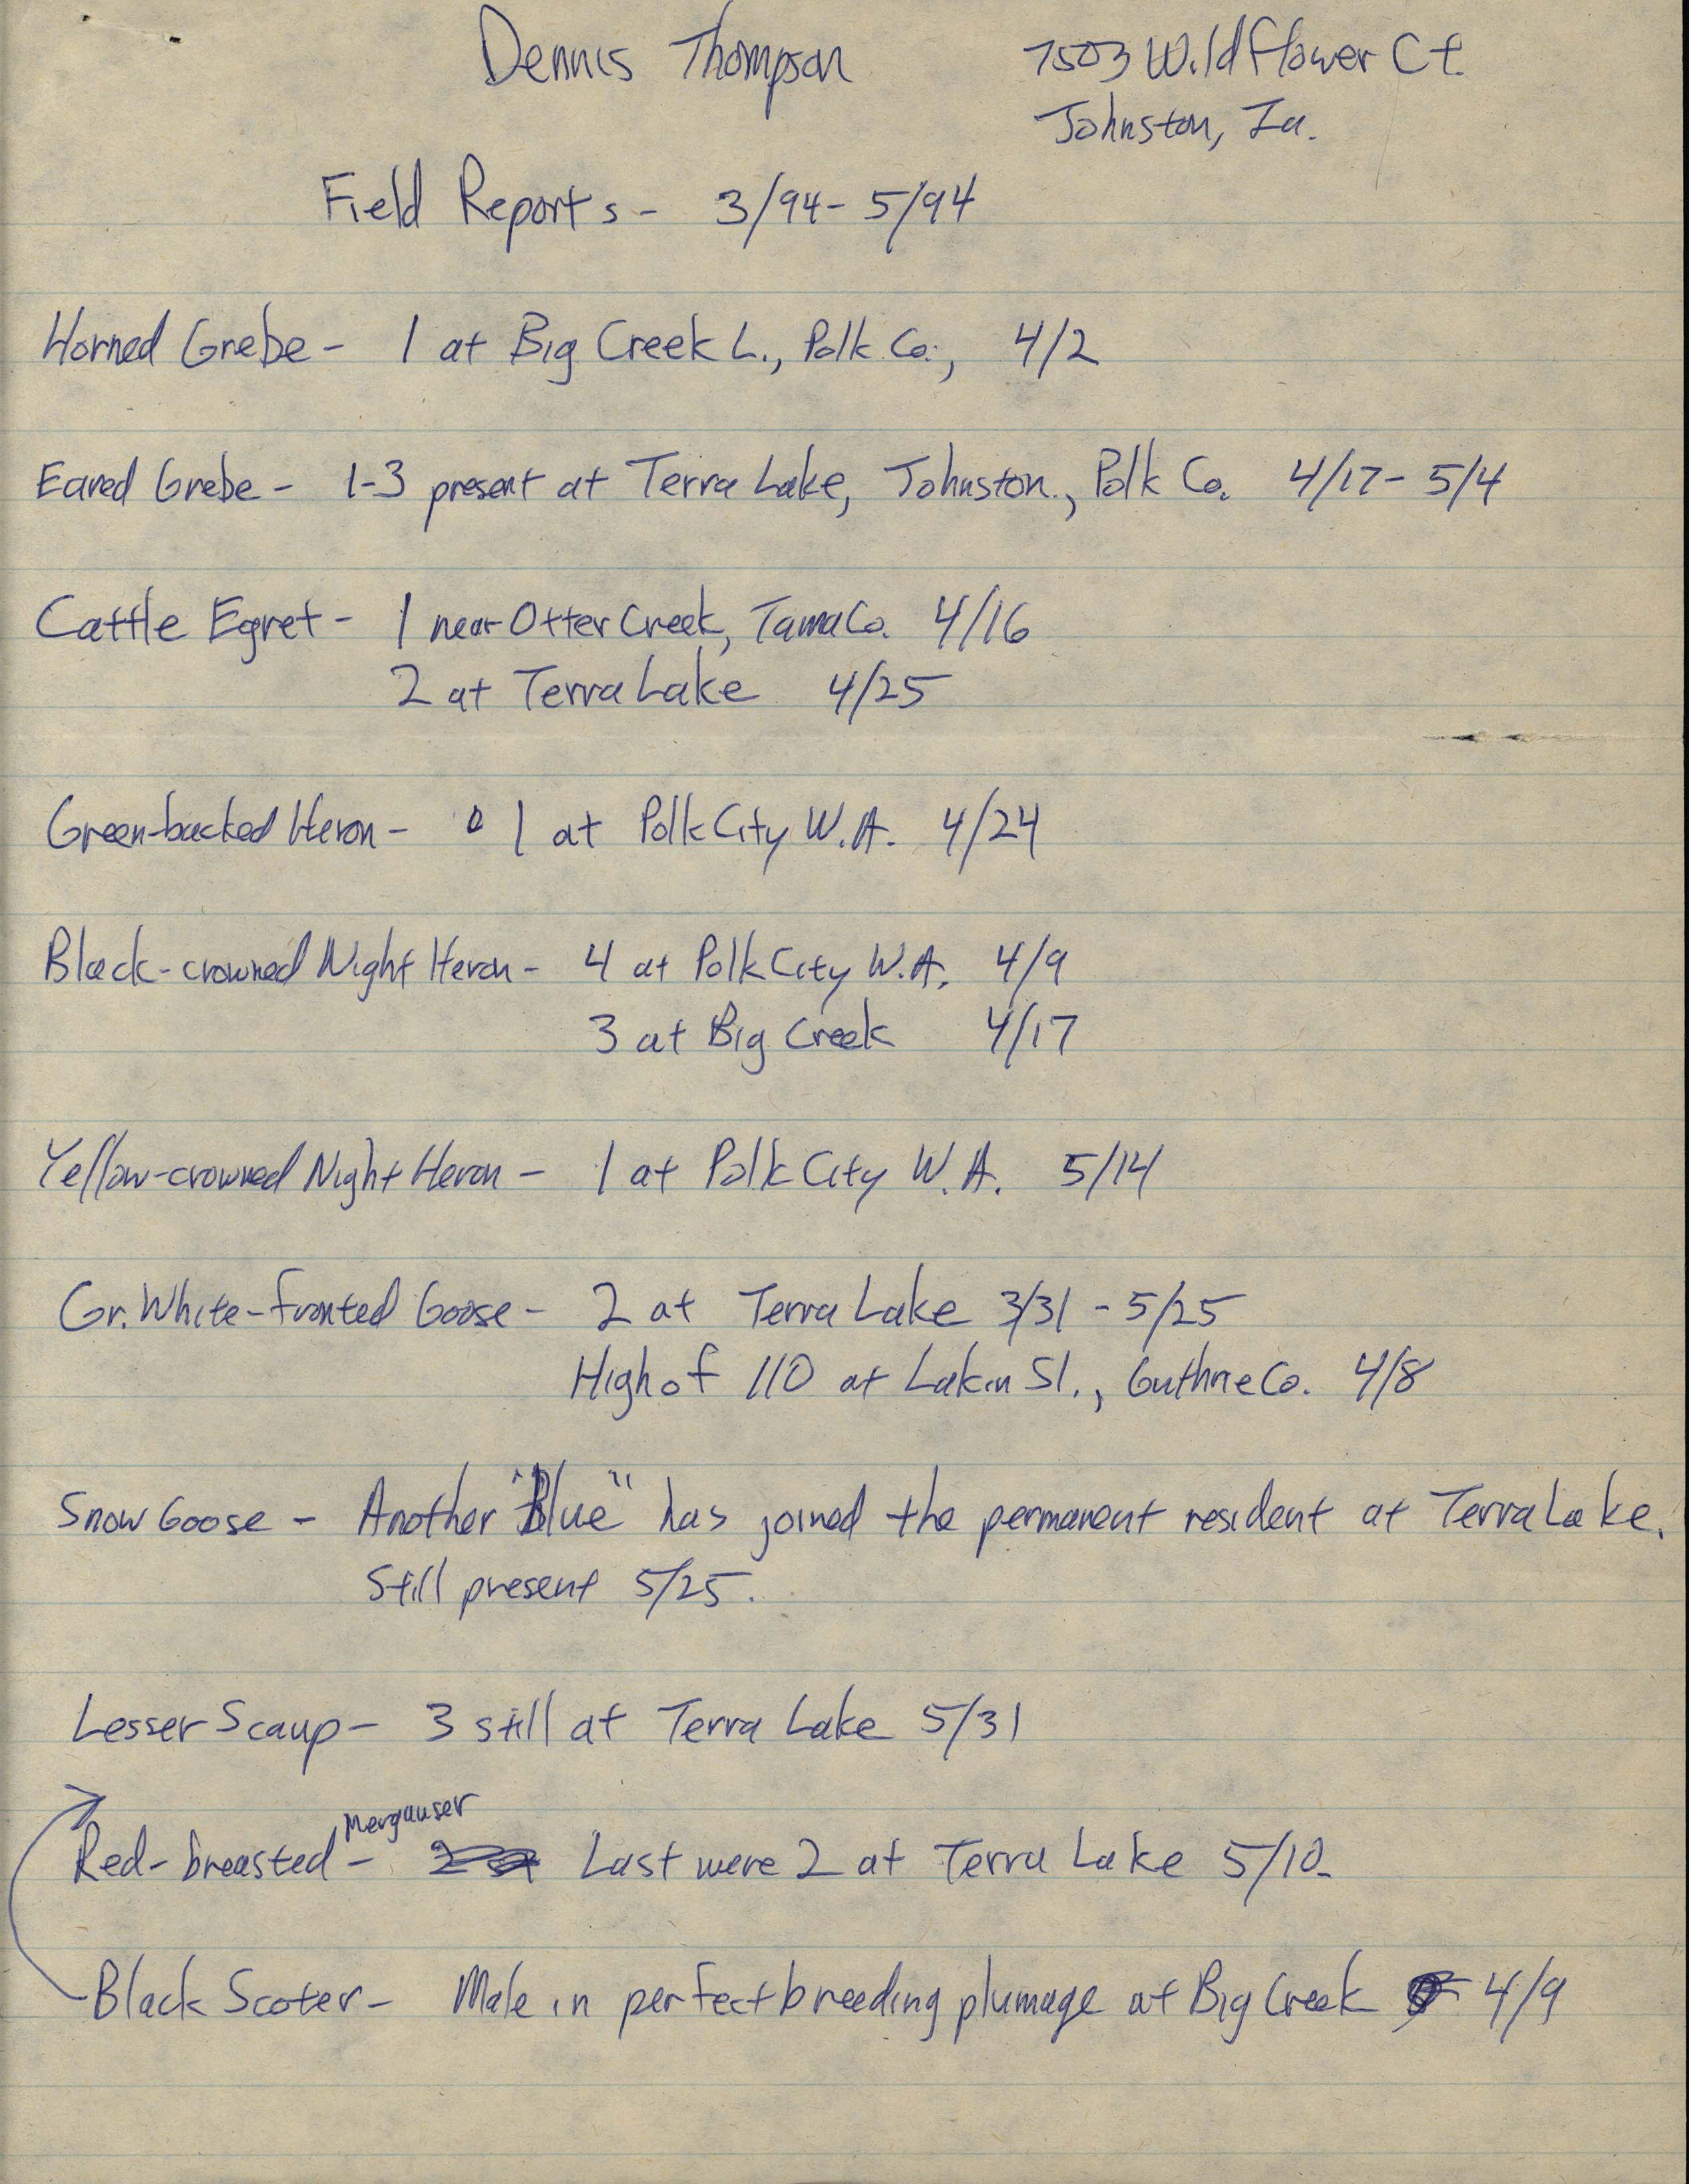 Field reports, 3/94 - 5/94, Dennis Thompson